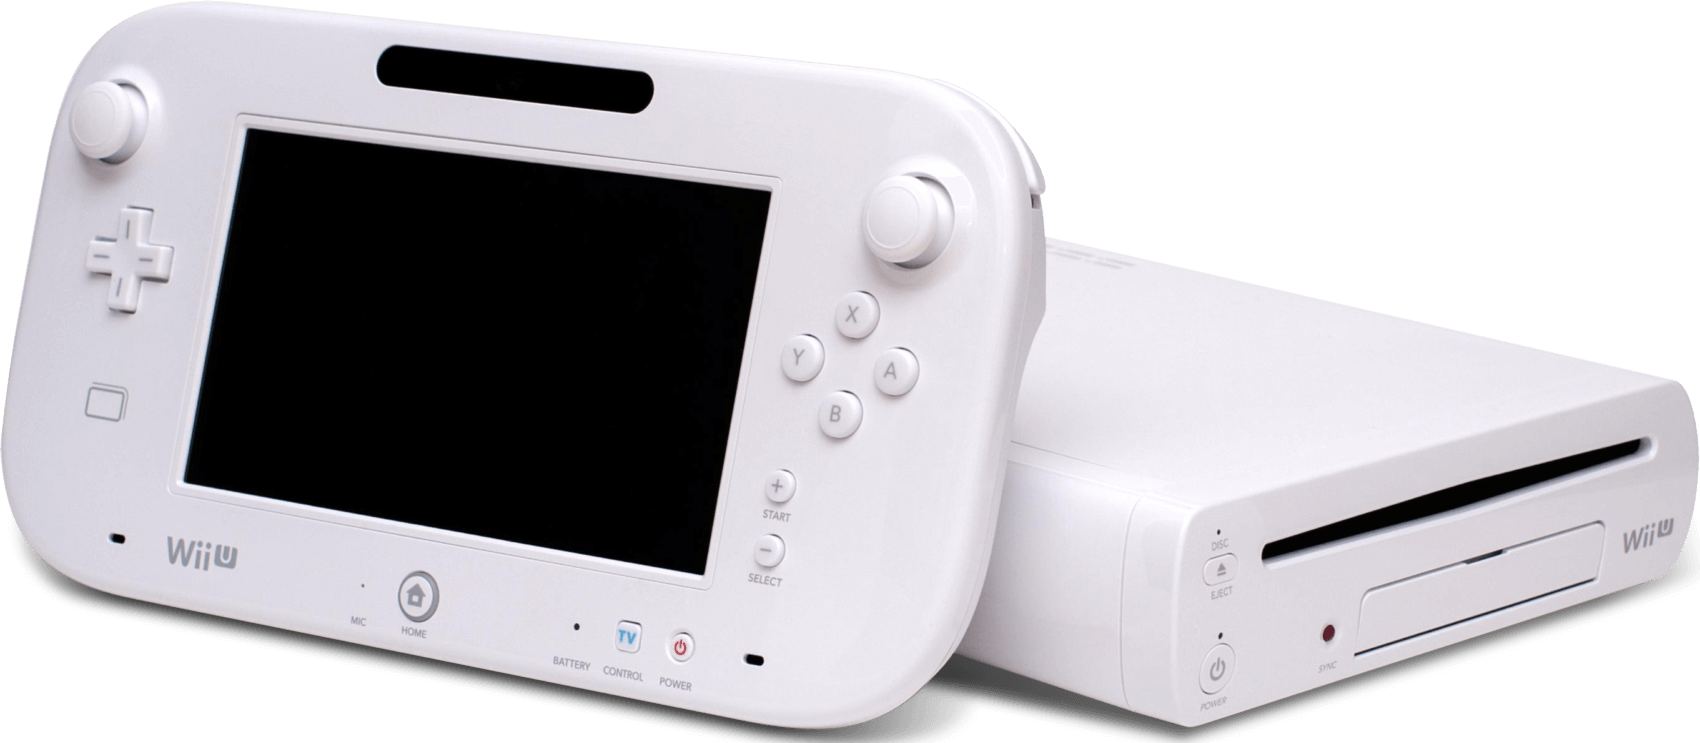 Easily Install Homebrew on Any Wii U or Virtual Wii